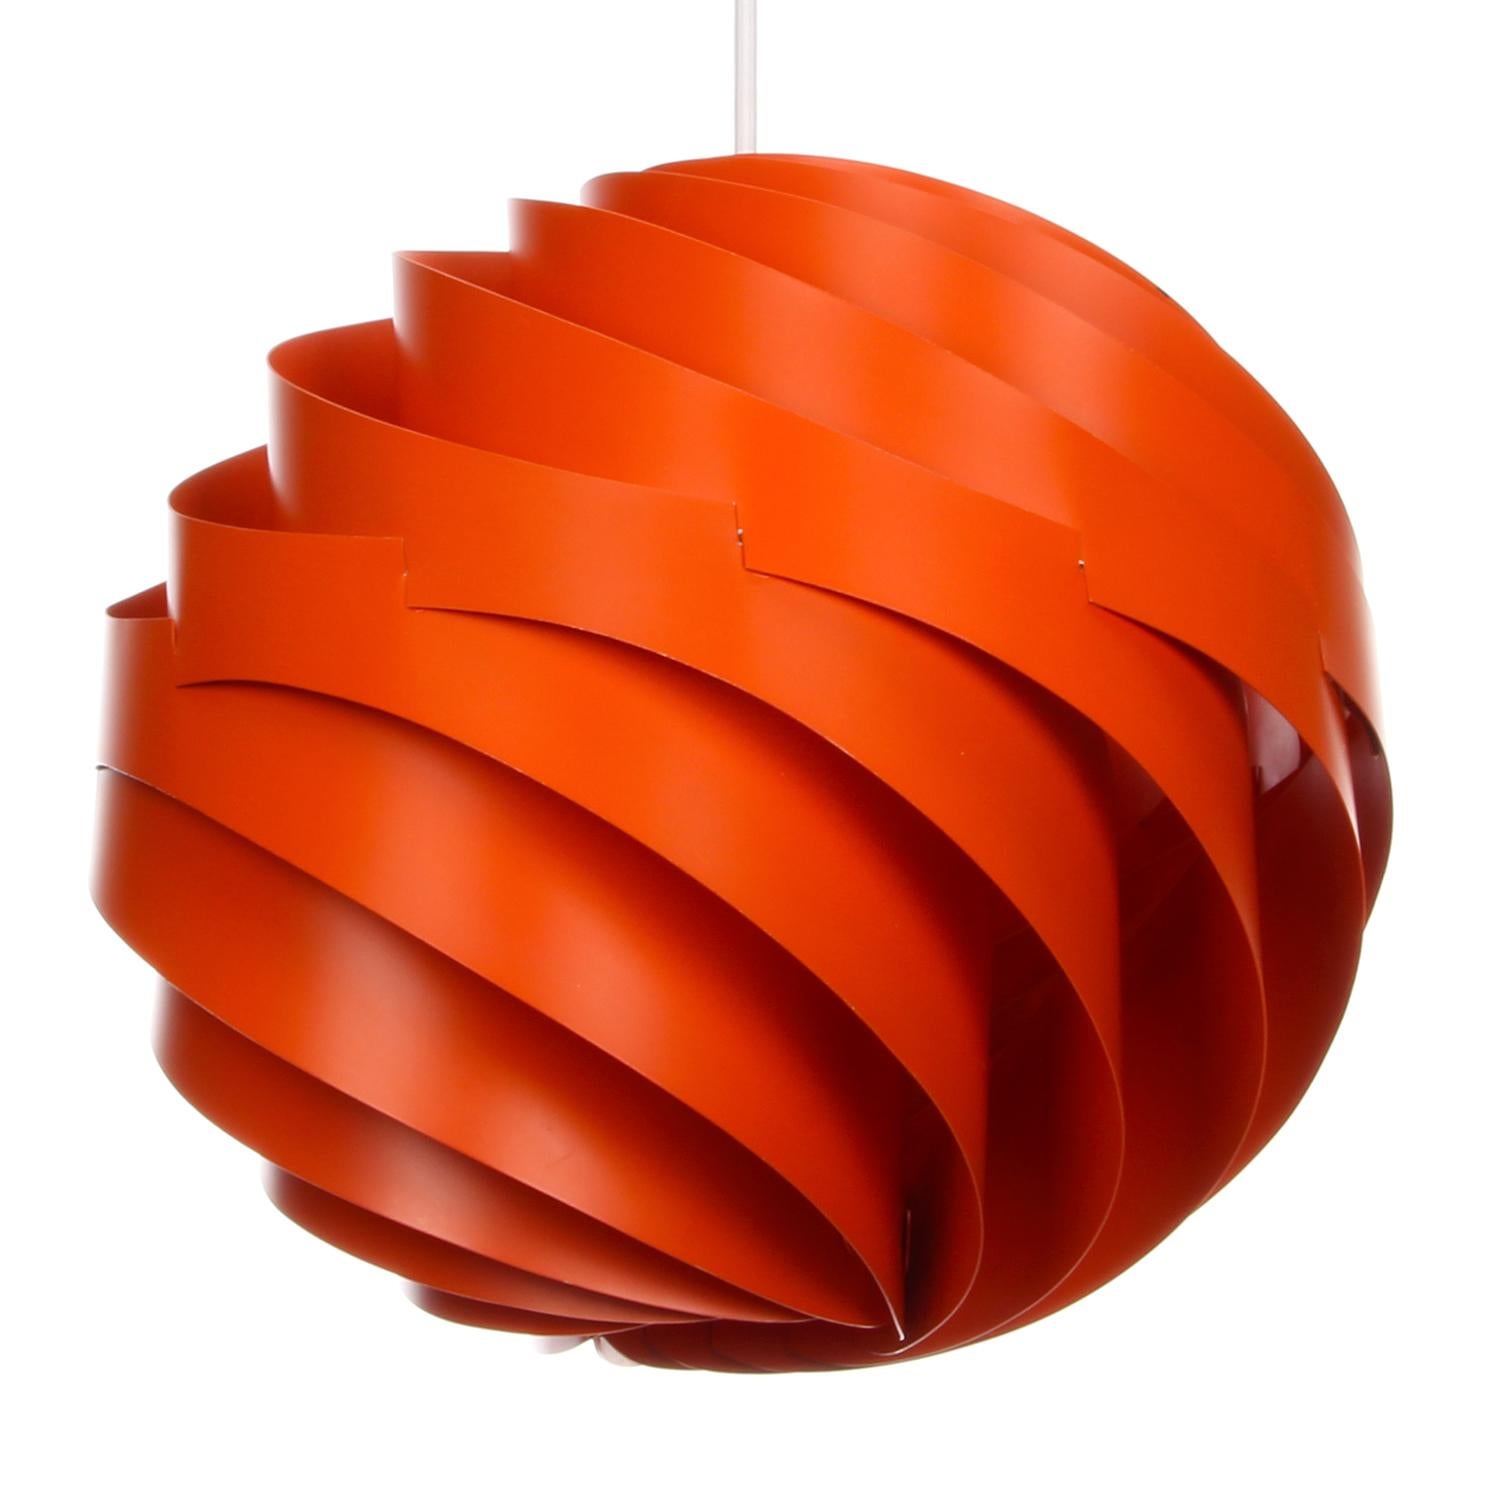 Turbo Orange Pendant by Louis Weisdorf for Lyfa in 1965, Vintage Edition (Skandinavische Moderne)